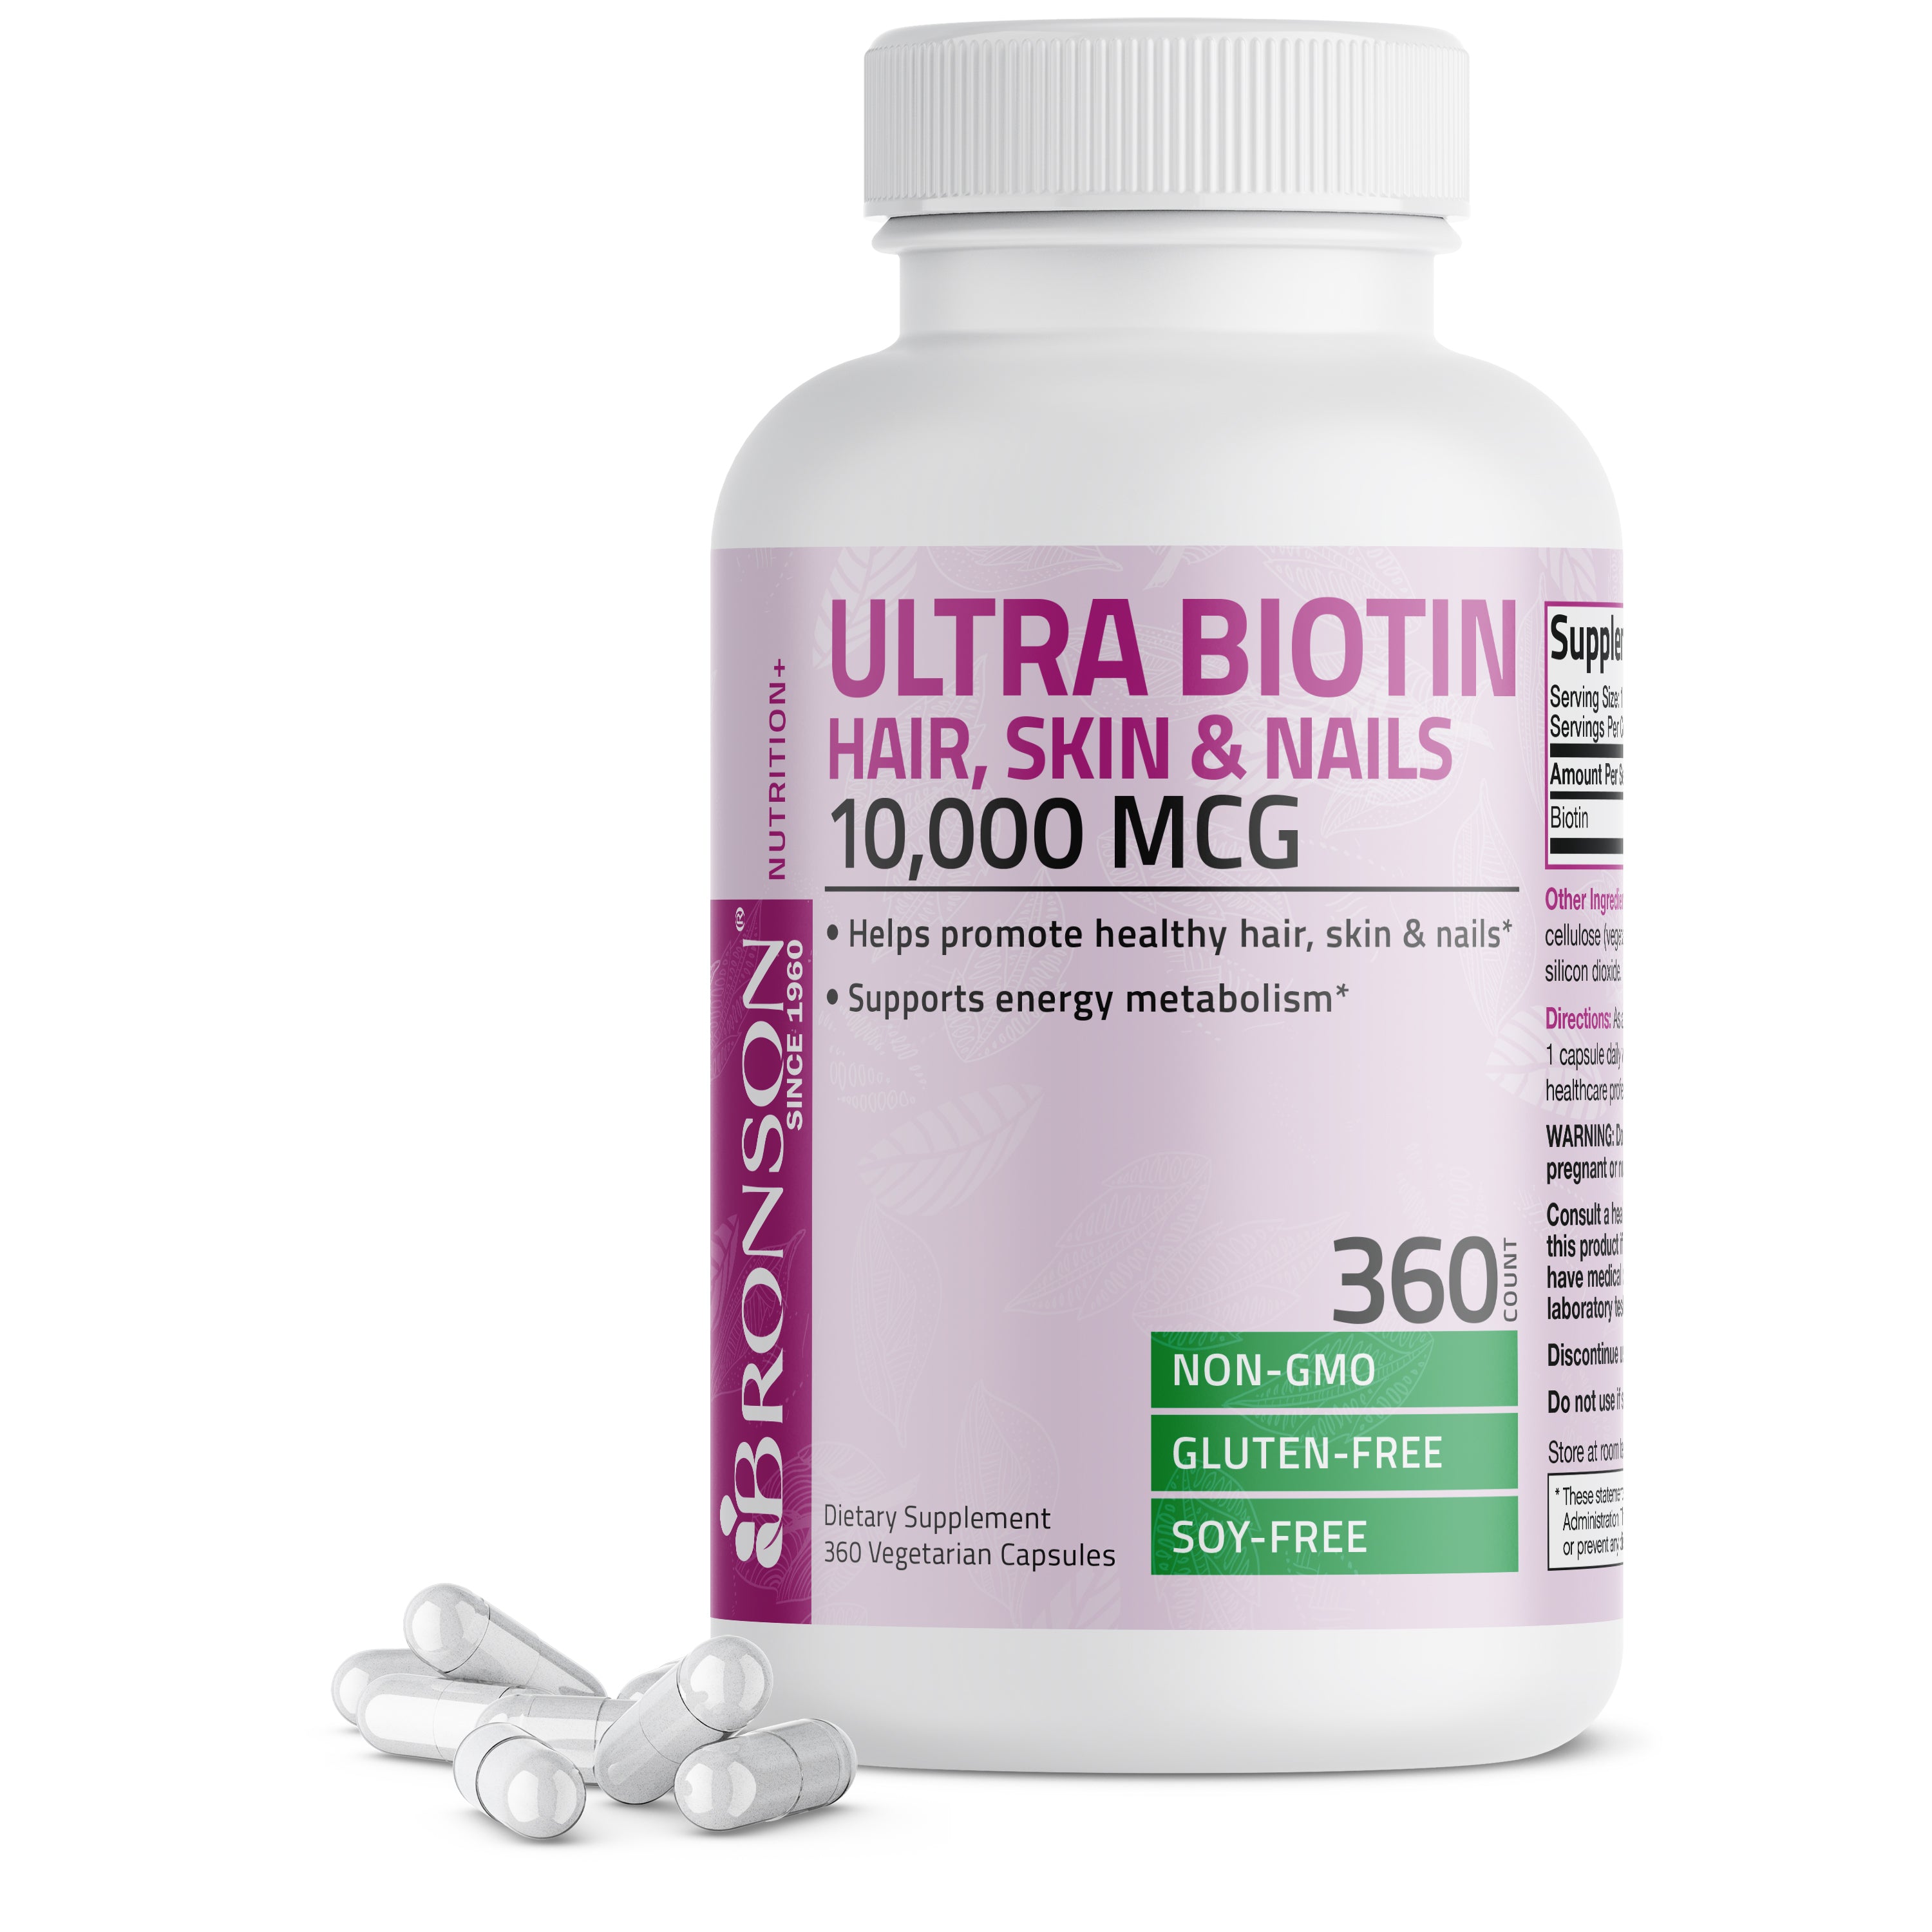 Ultra Biotin Hair, Skin & Nails - 10,000 mcg view 10 of 14